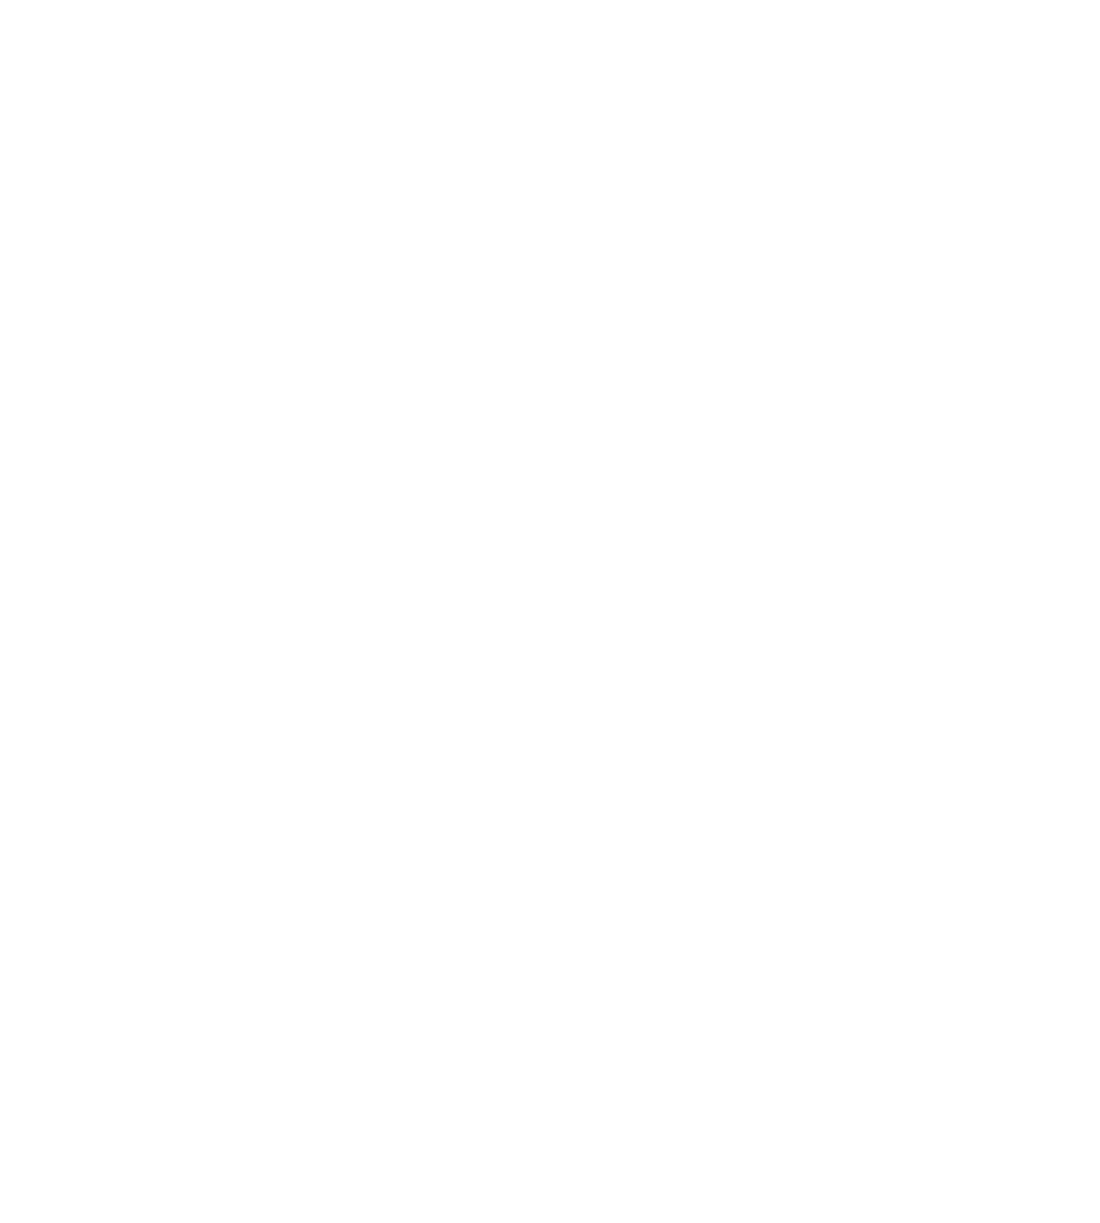 Lakes logo